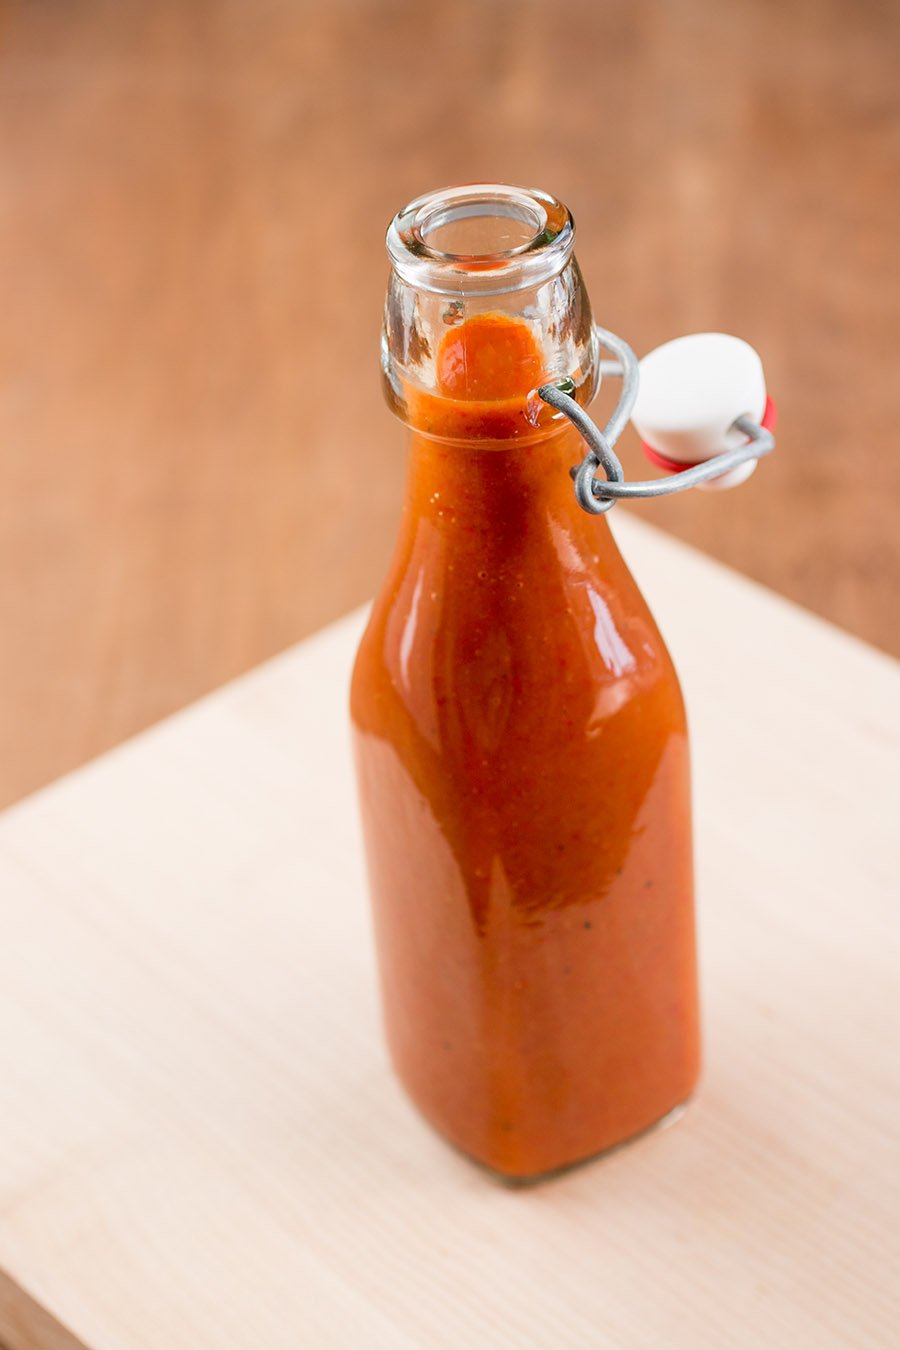 Homemade Caribbean-Style Sweet Chili Sauce